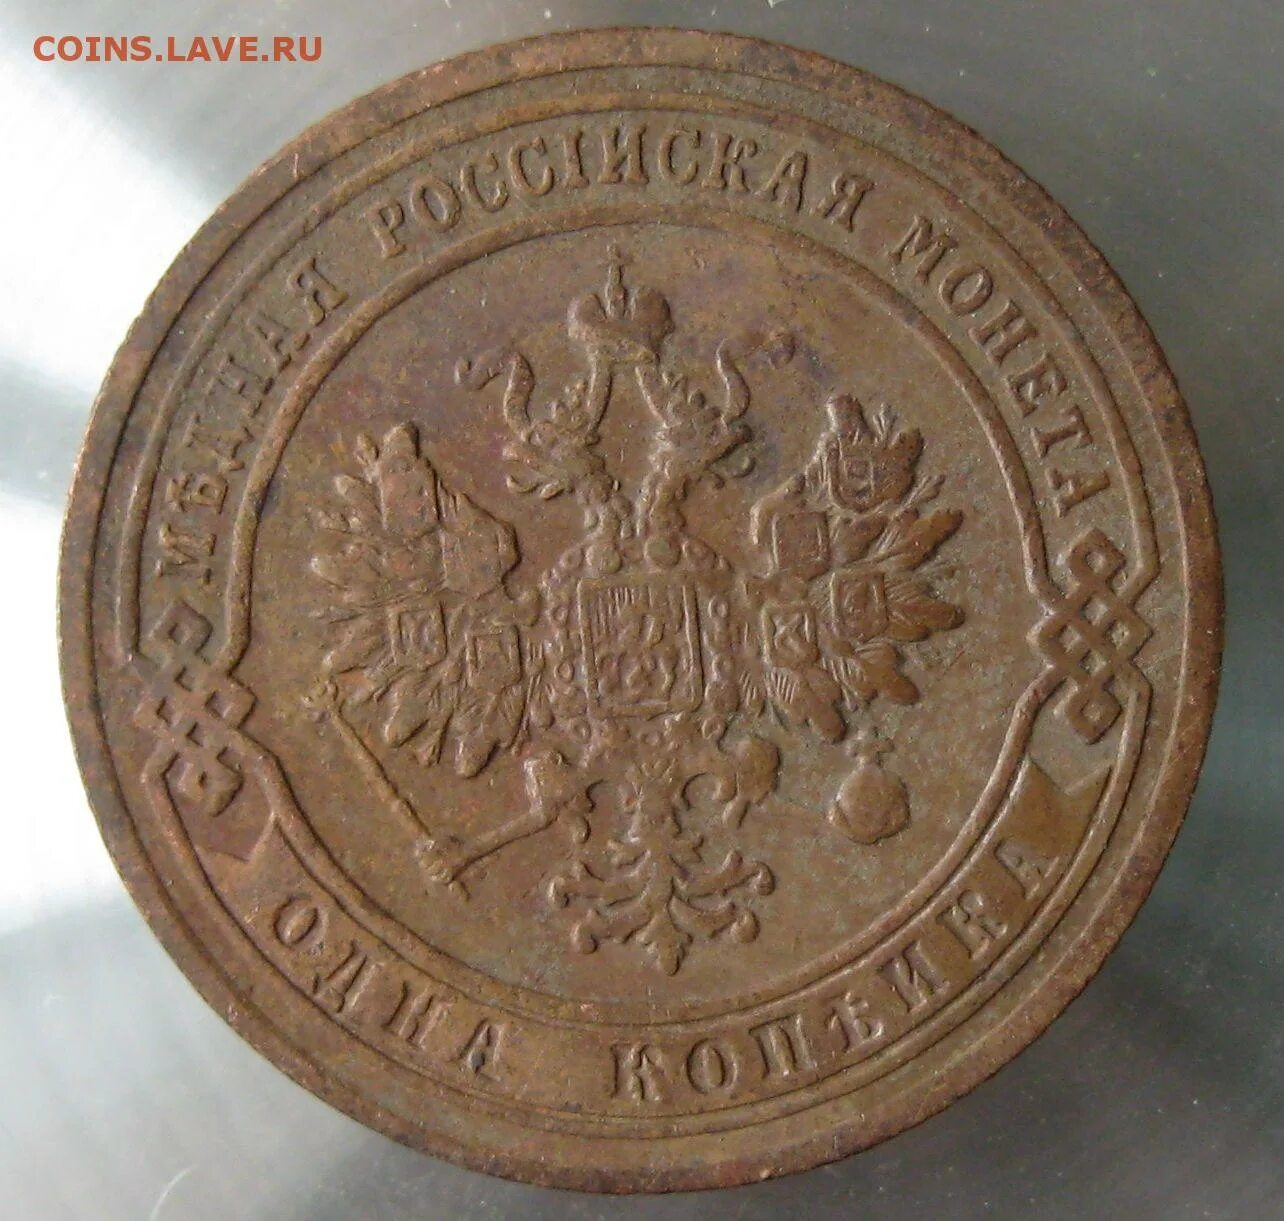 1 Коп 1903г. Копейка 1907г. Выглядели копейки в 1907 ф. Монетка 1 копейка 1903г цена.